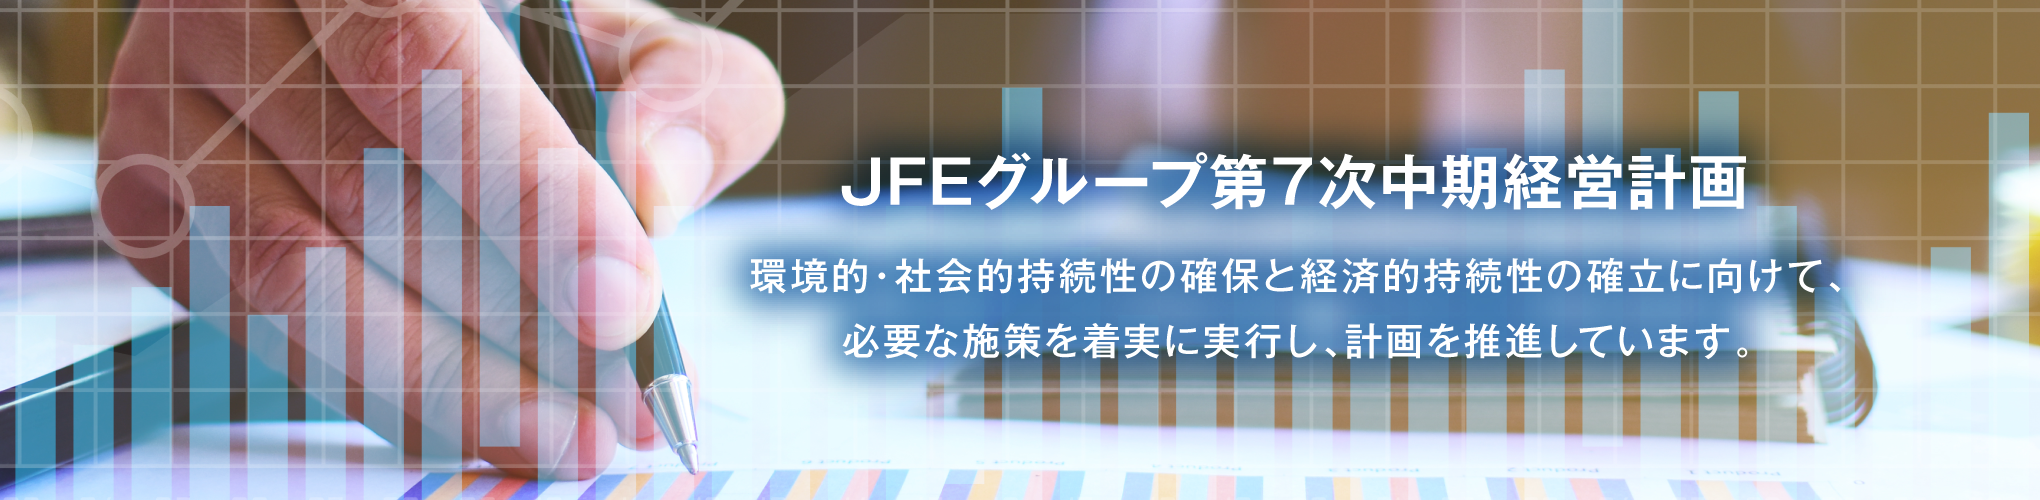 JFEグループ第7次中期経営計画